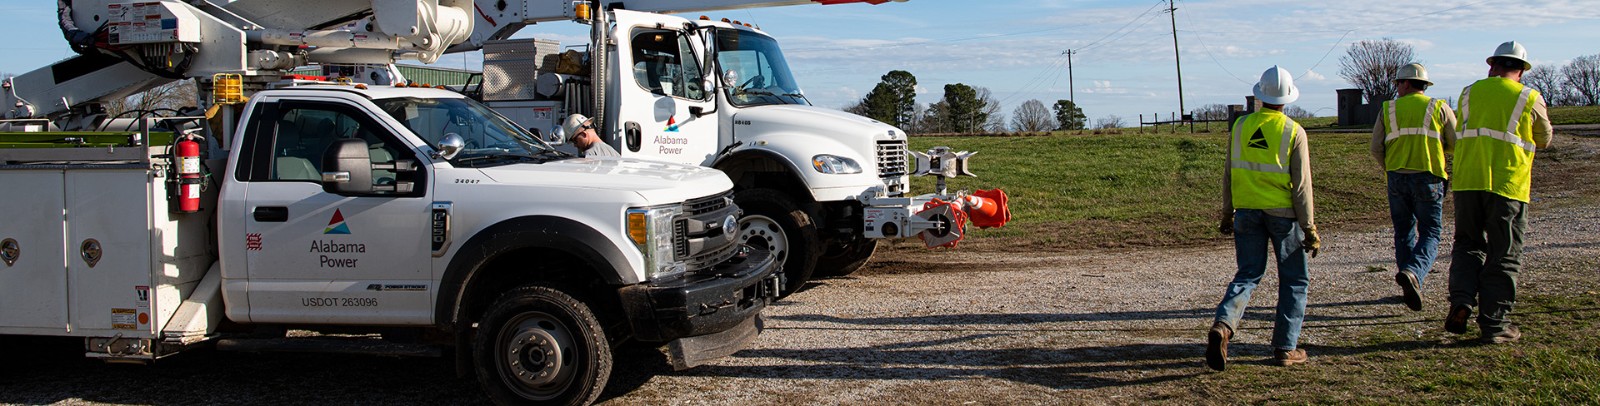 Alabama Power fleet trucks with field workers